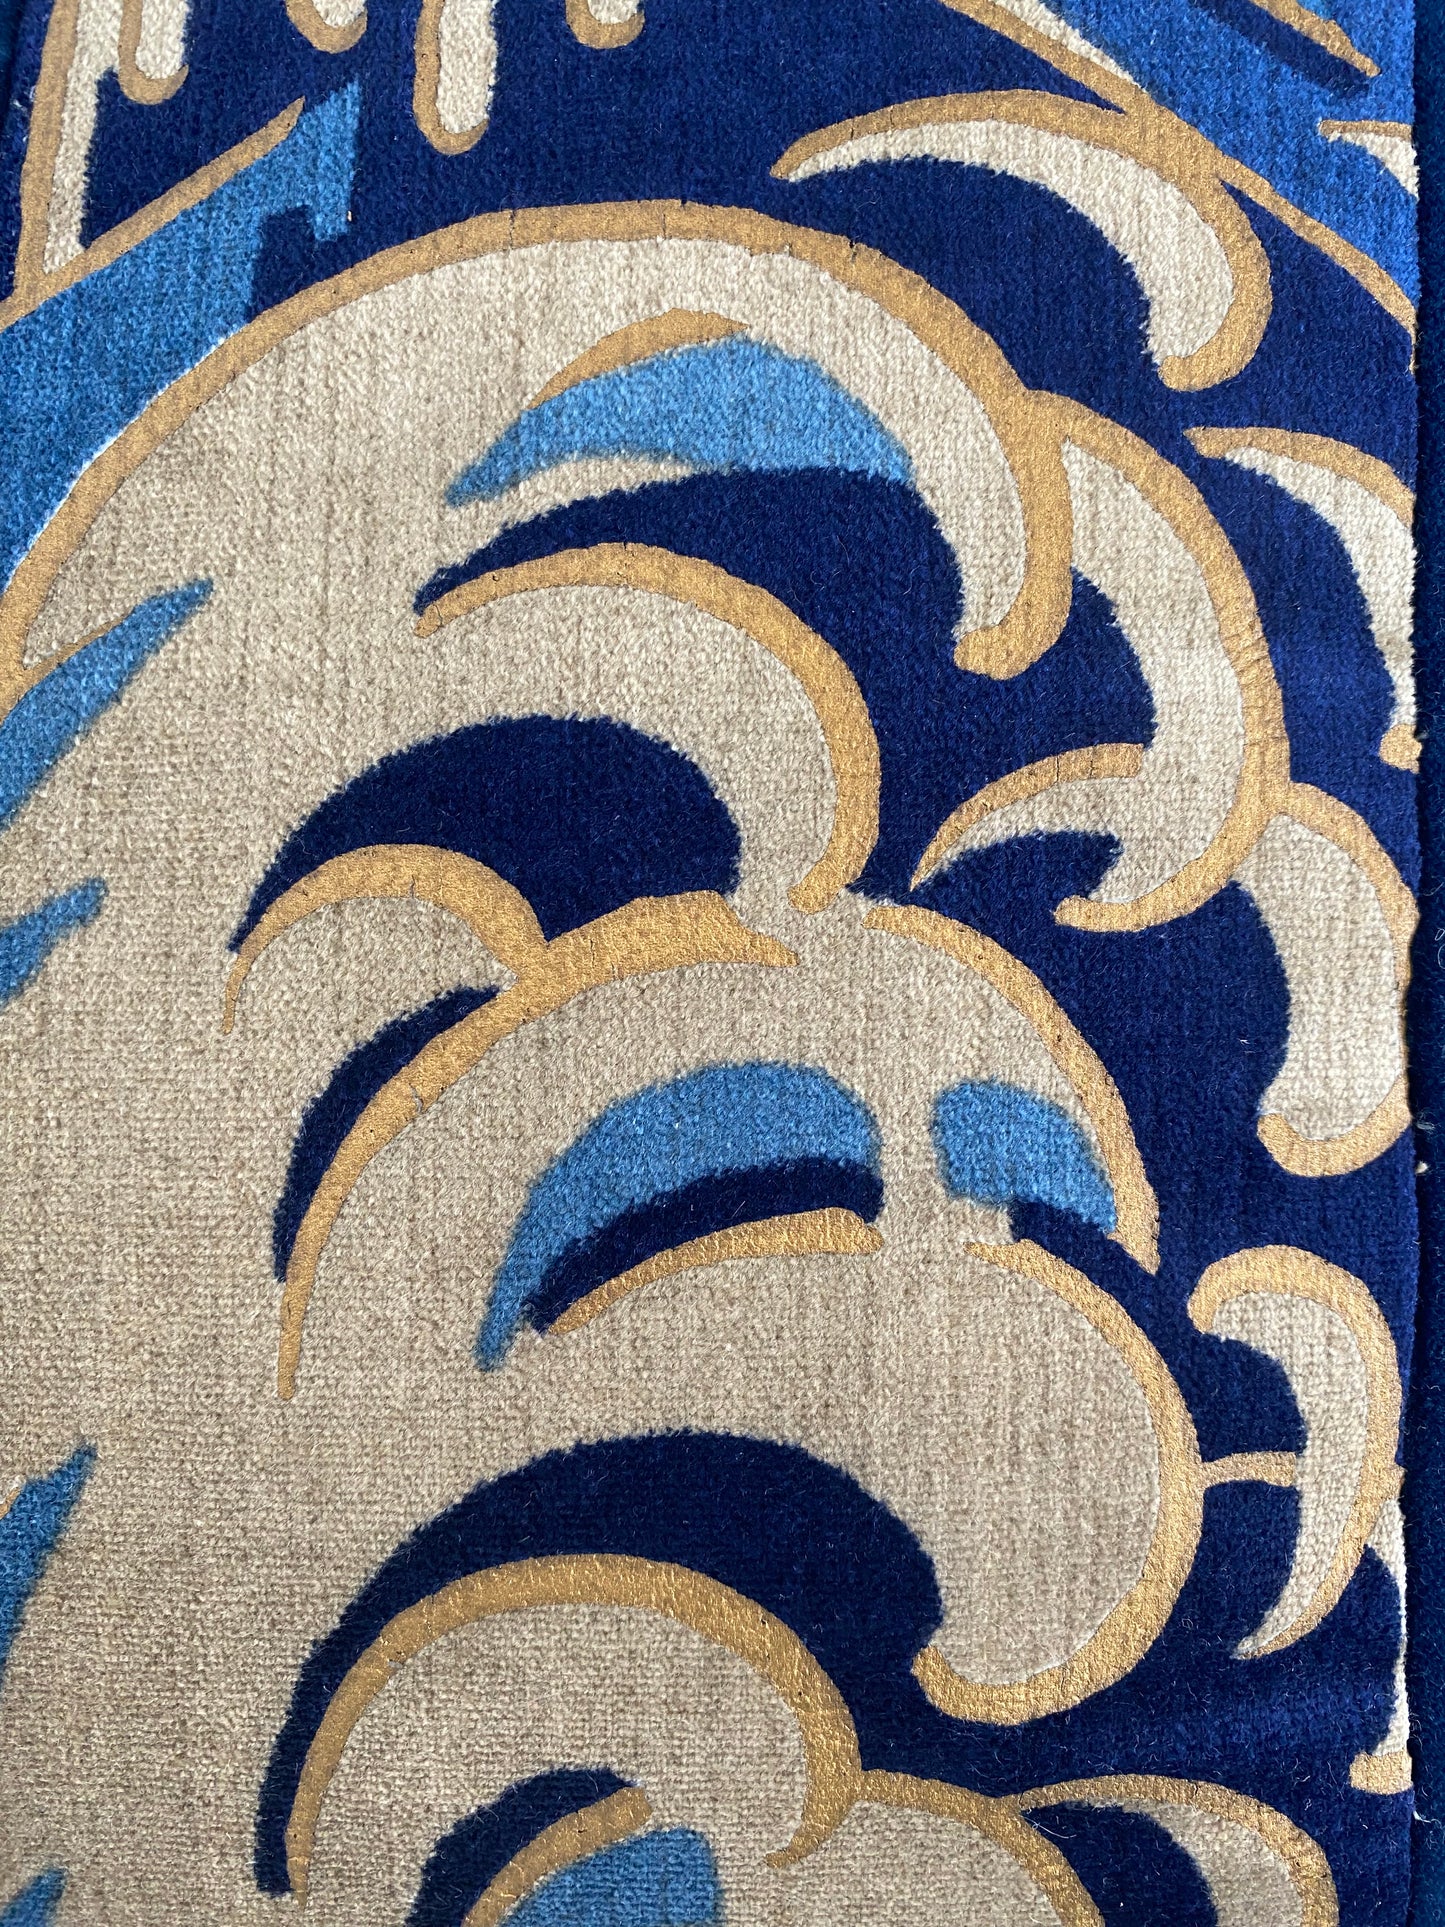 Deep Cobalt Blue Wave Pillow with Accent Fabric